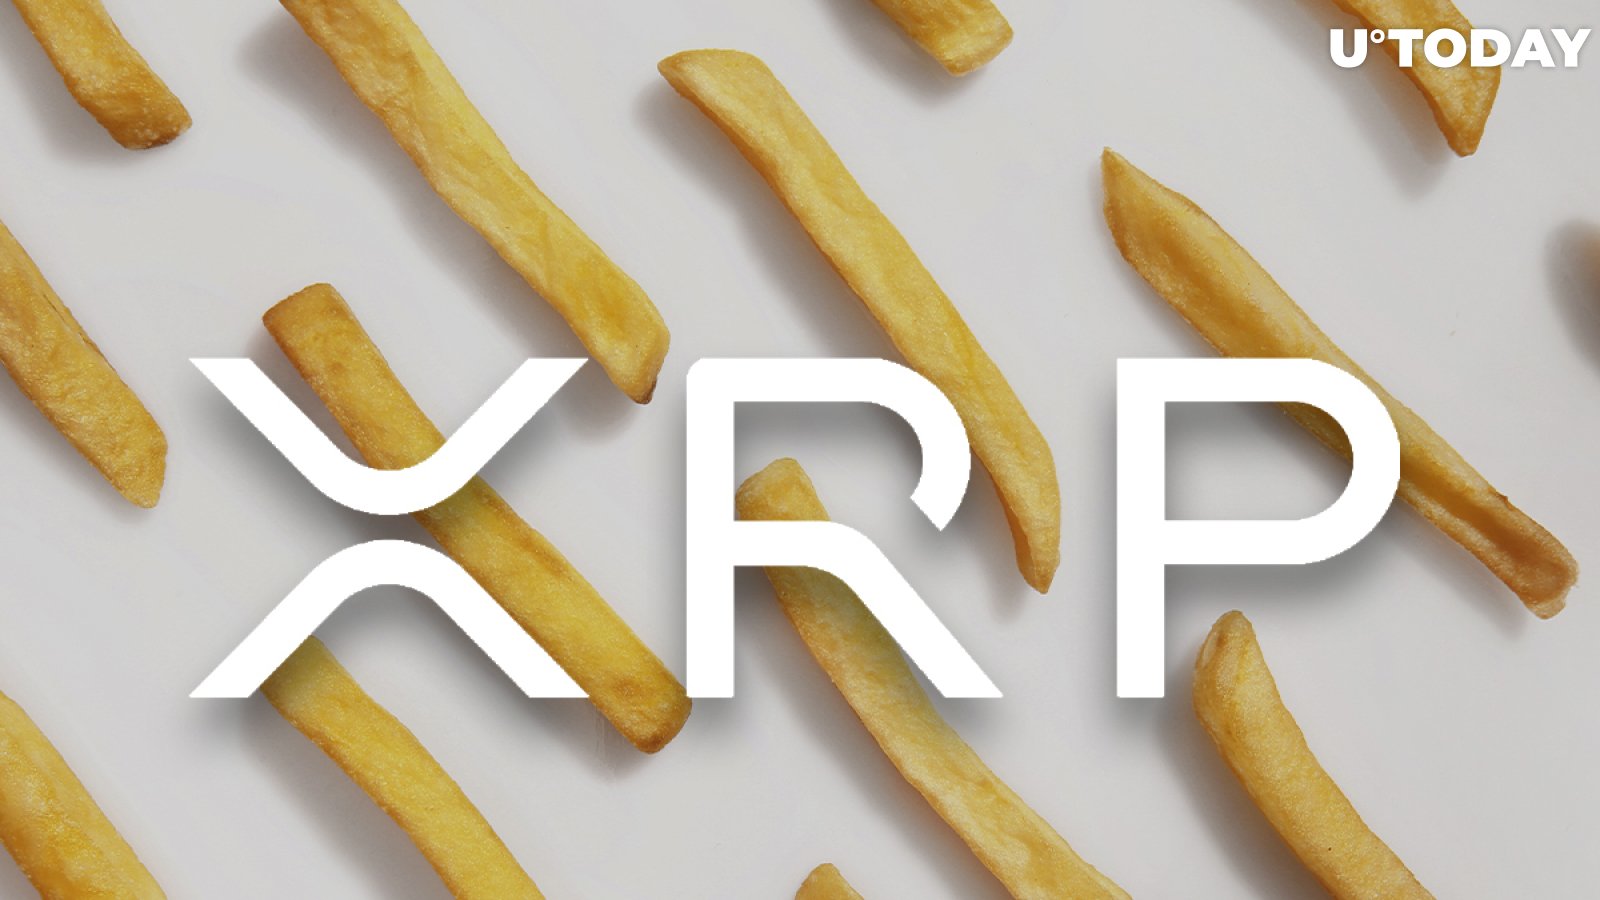 XRP Now Accepted by FRIETSHOP Wetteren Restaurant in Belgium